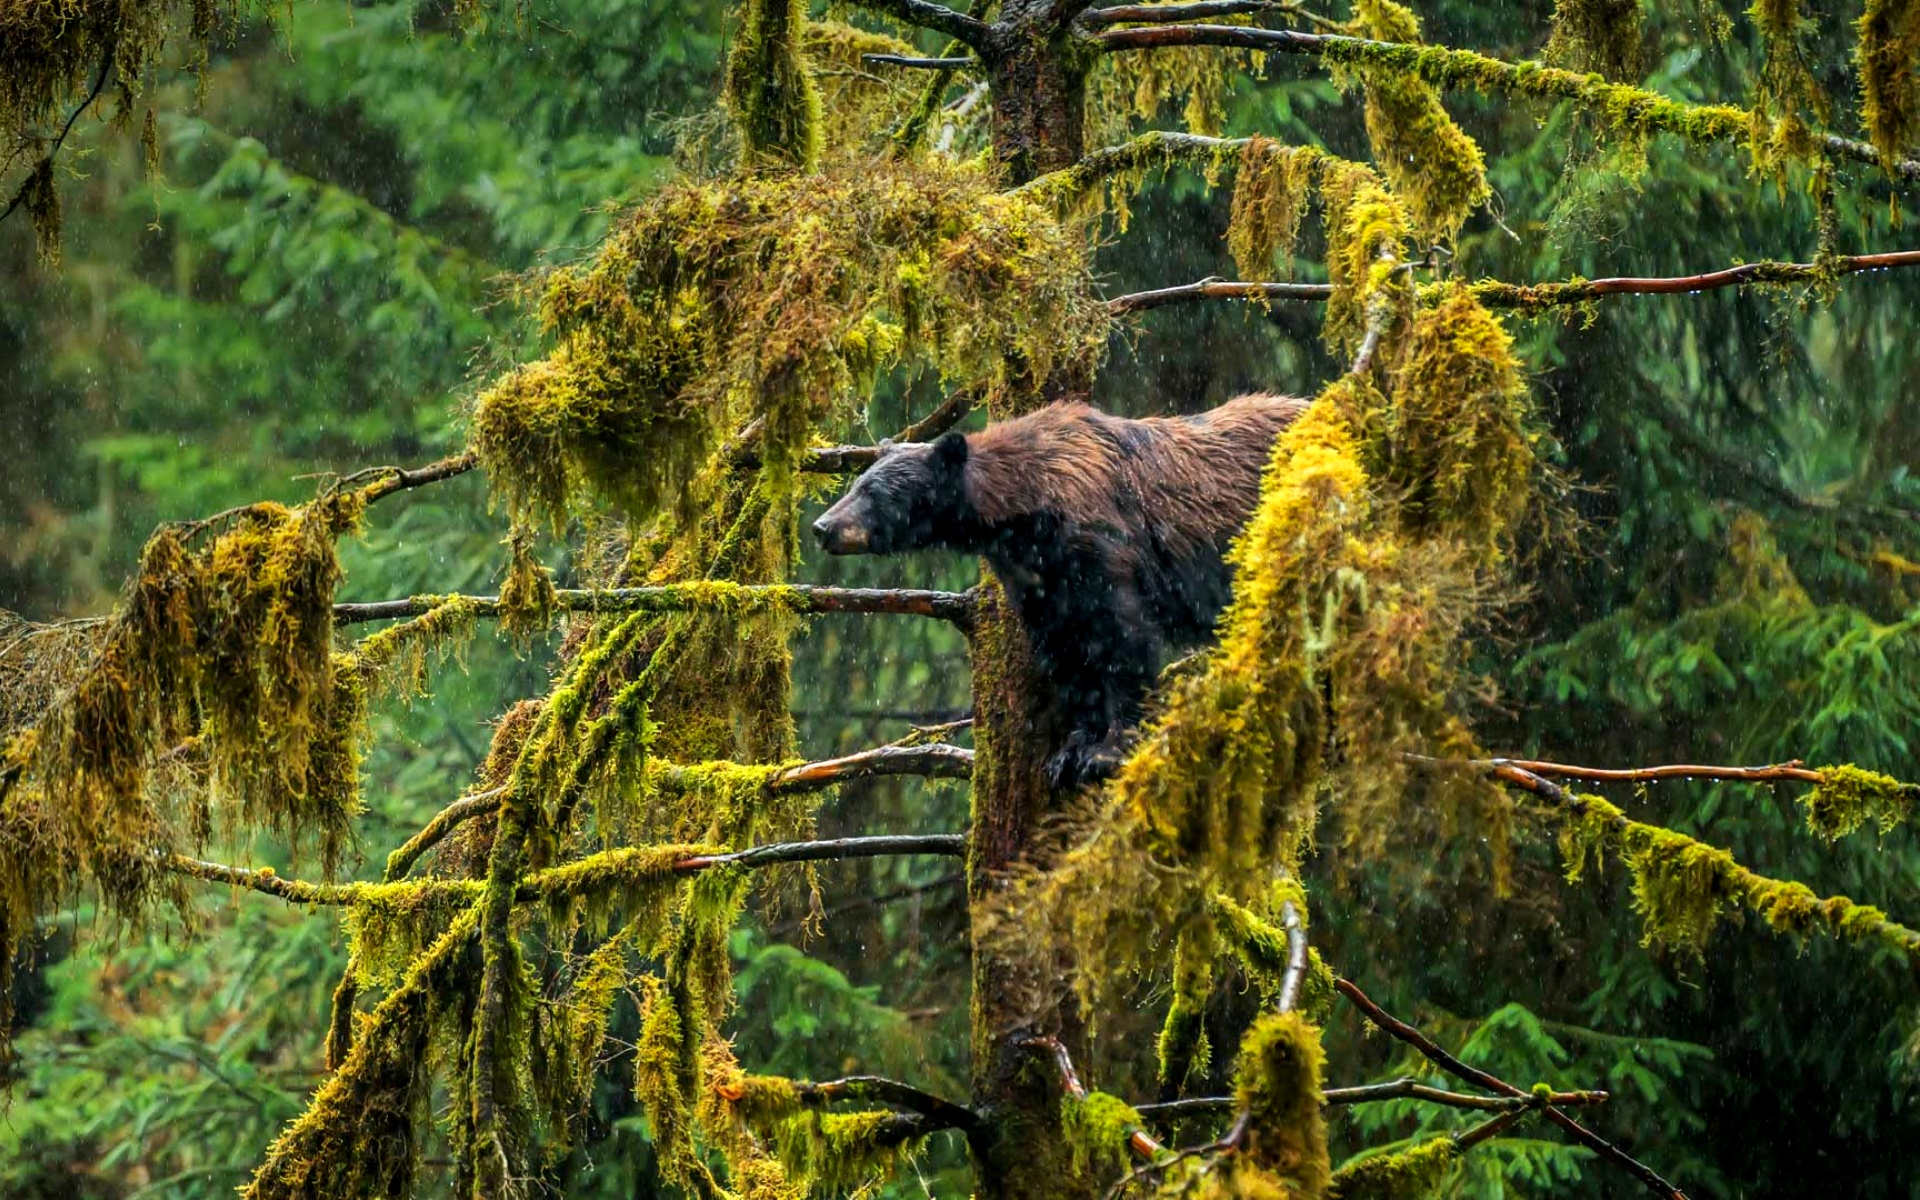 Www bing com image. Глухая Тайга бурелом. Медведь в тайге. Медведь в лесу. Медведь на дереве.